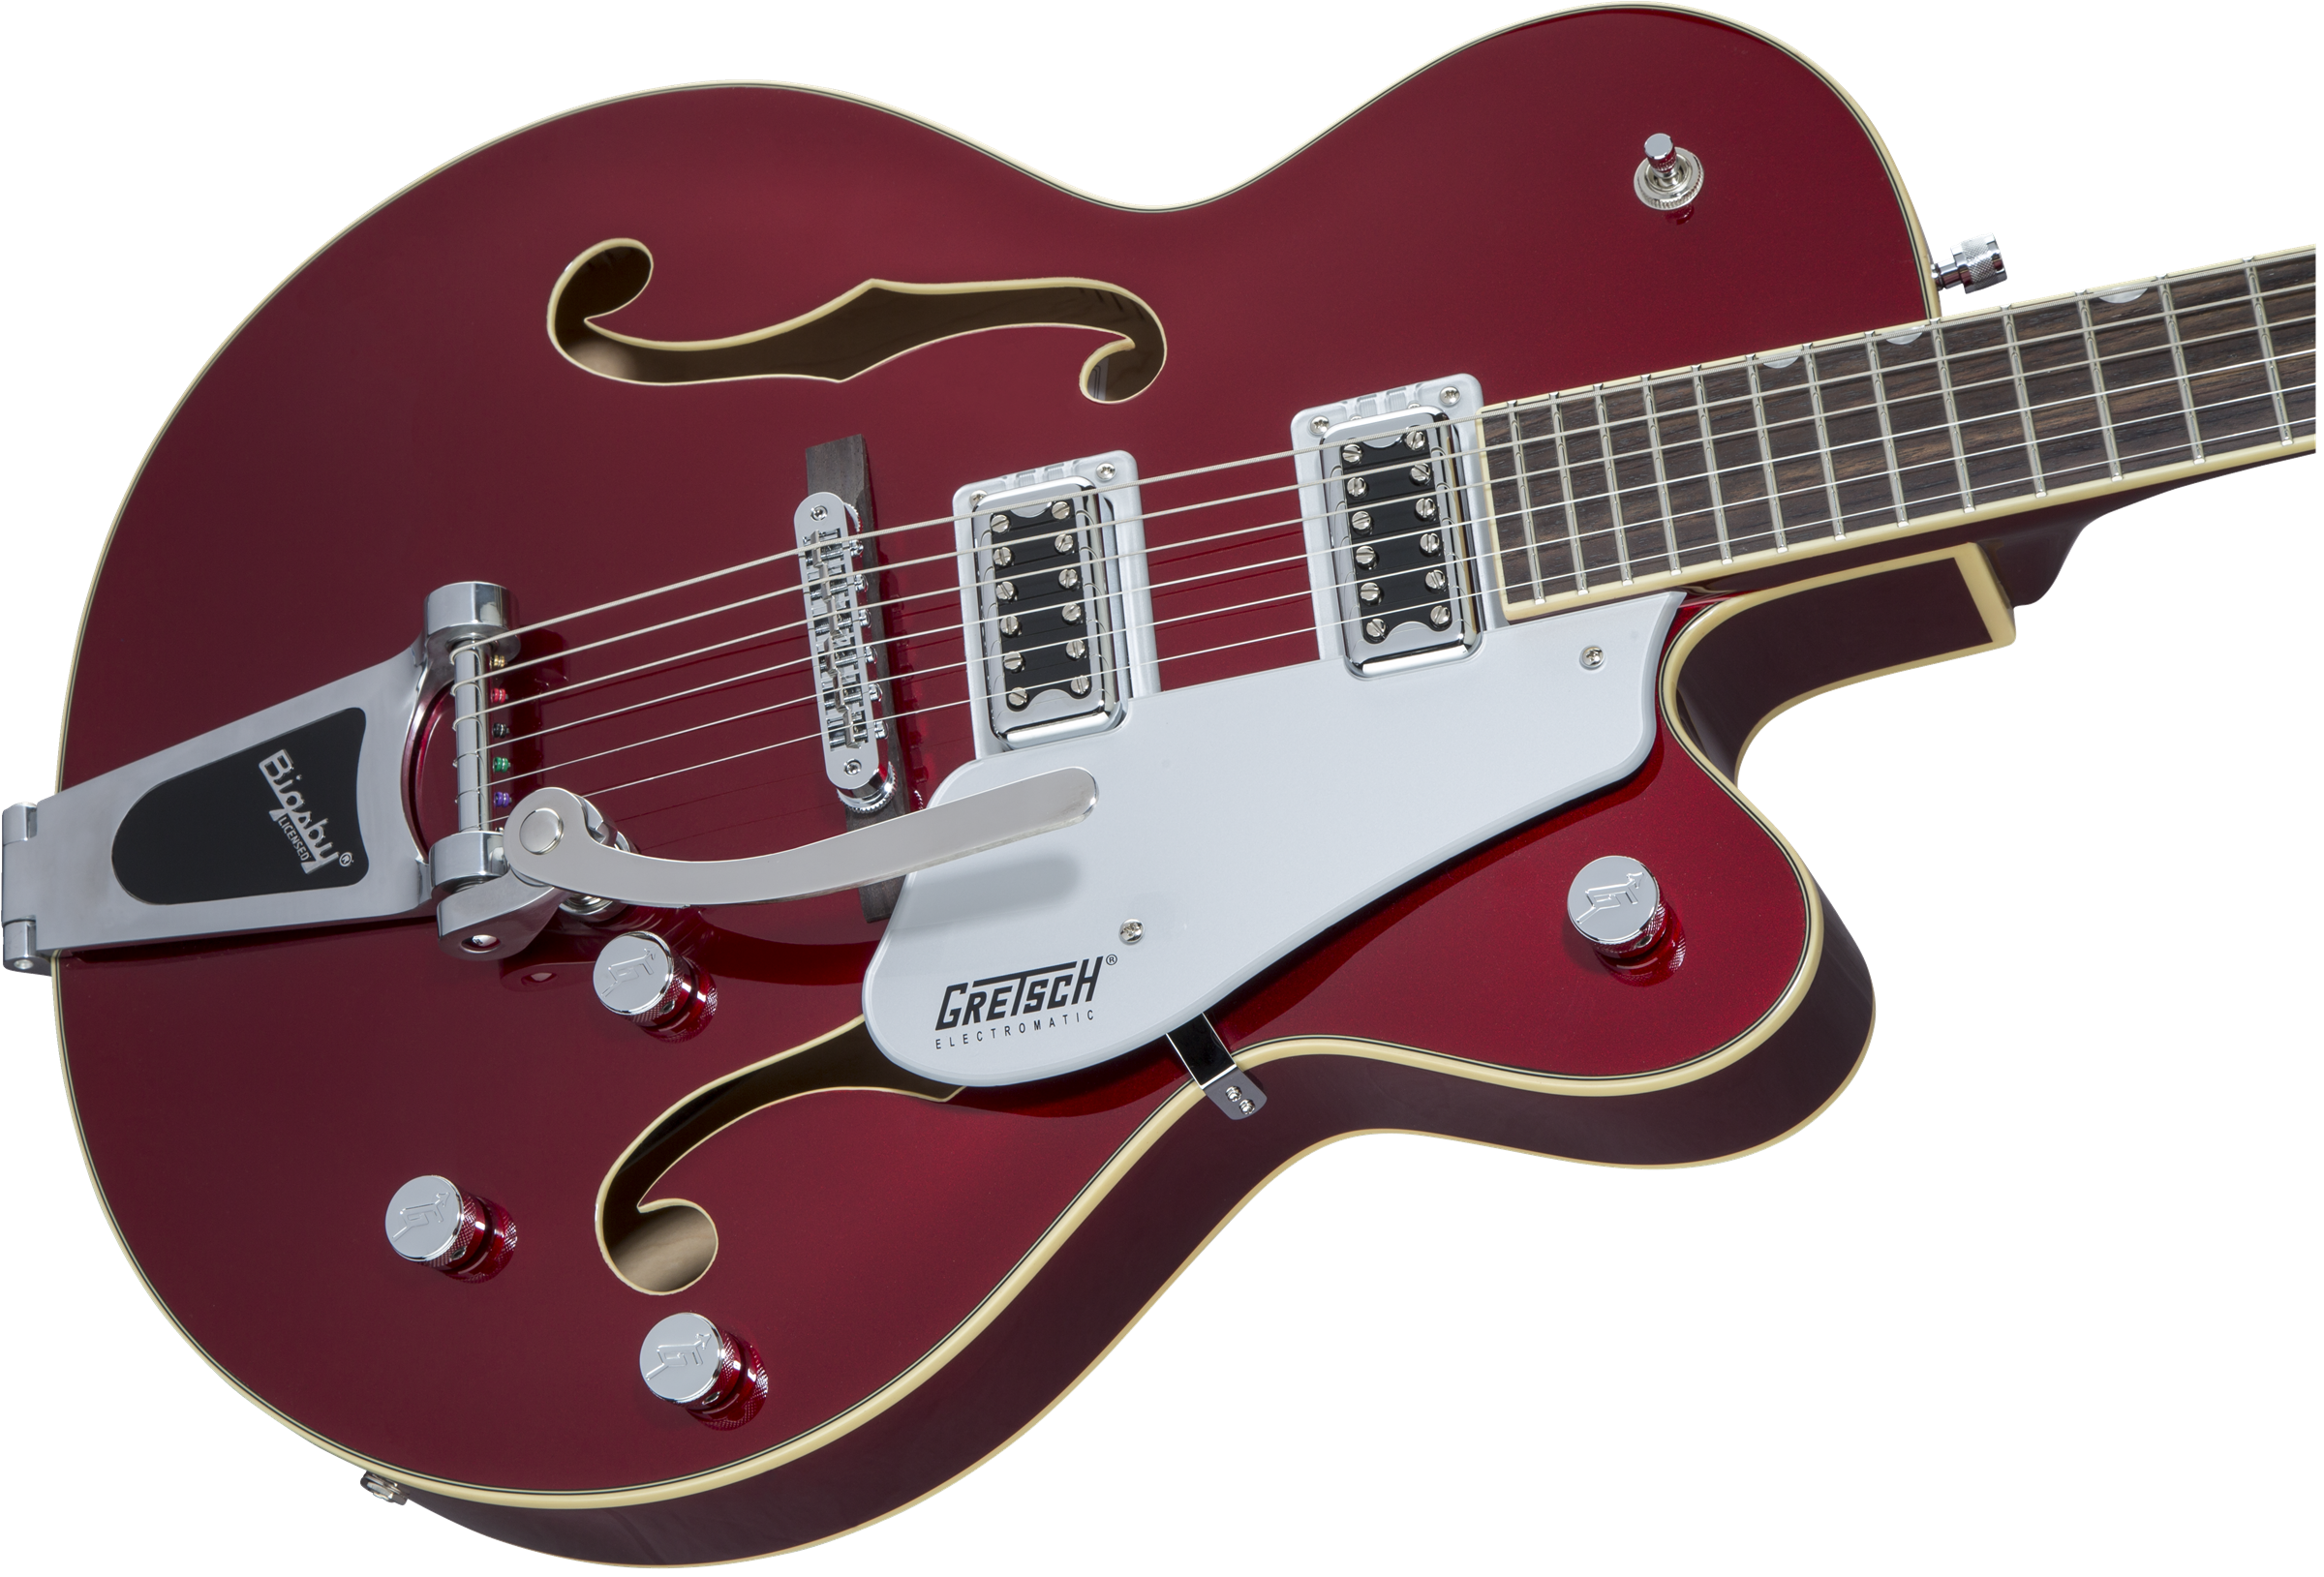 Gretsch G5420t Electromatic Hollow Body 2018 - Candy Apple Red - Semi hollow elektriche gitaar - Variation 3